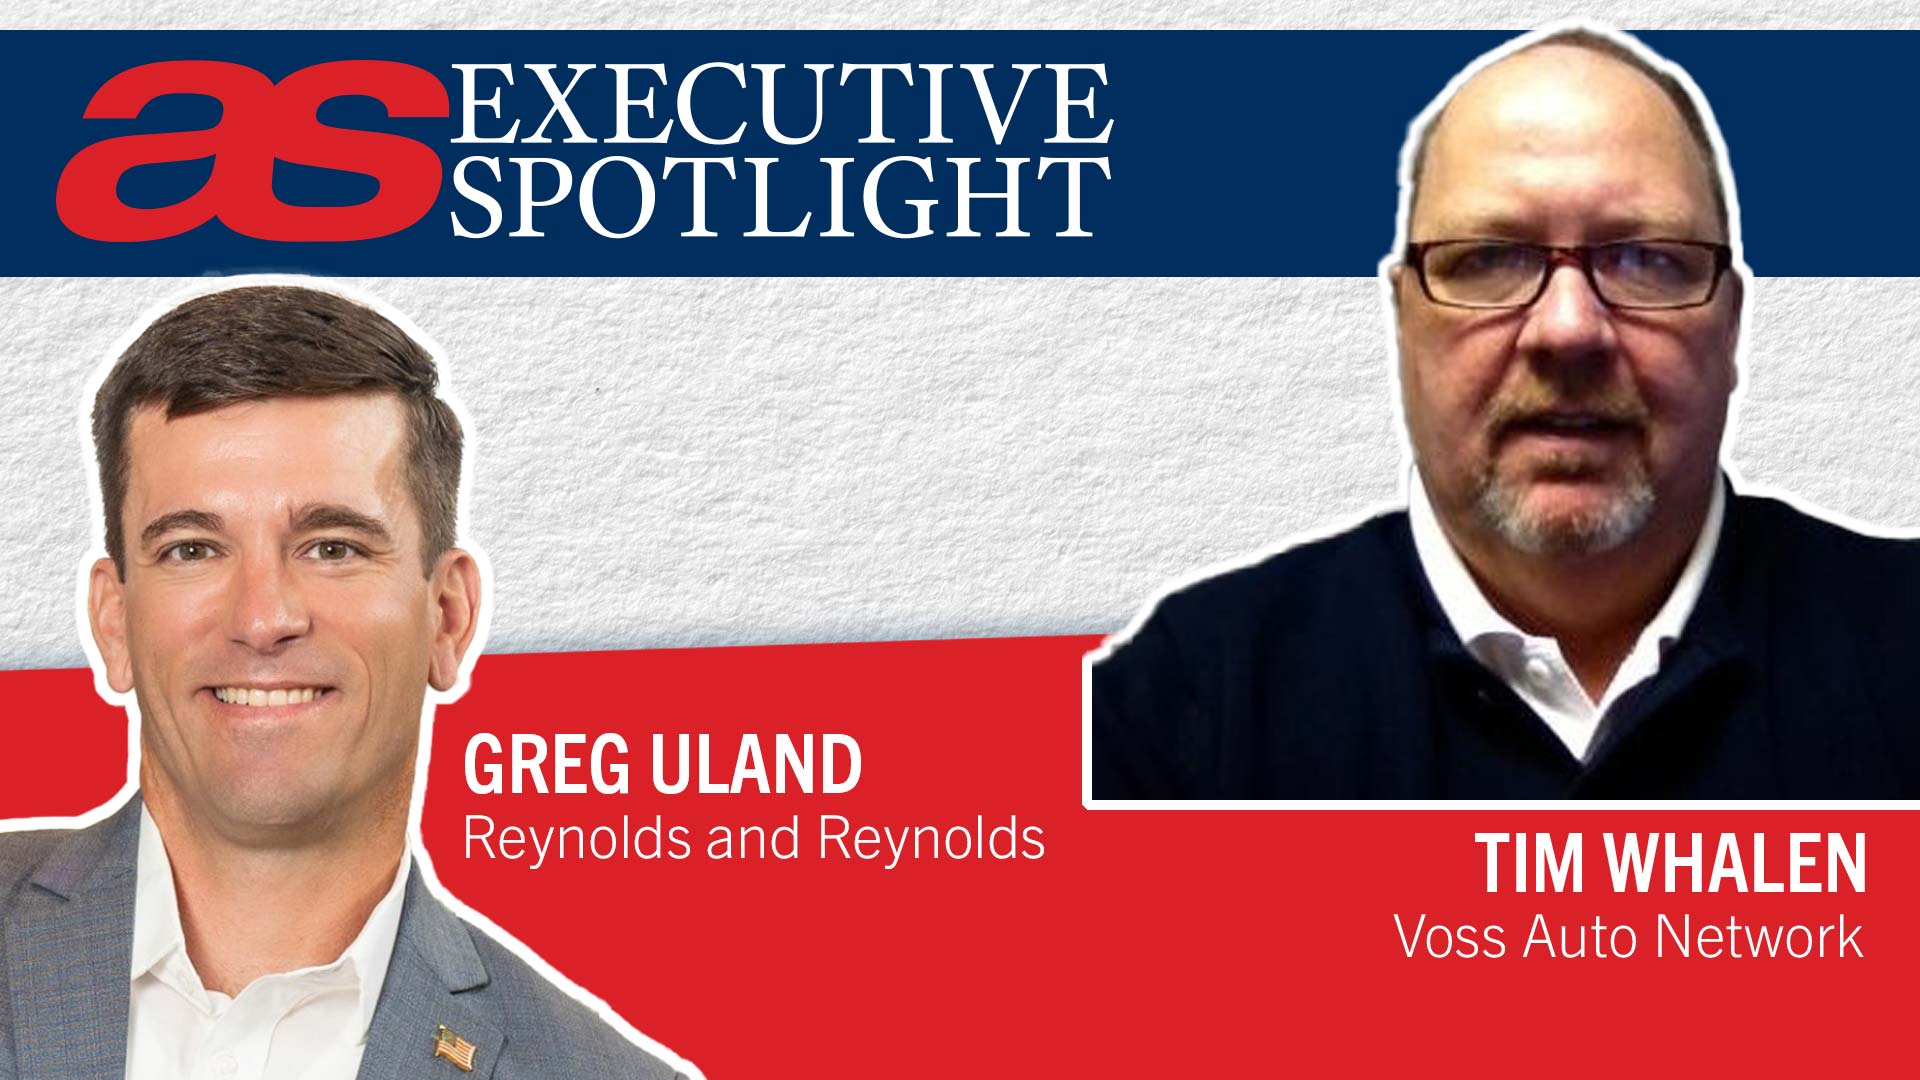 Executive Spotlight reynolds and reynolds